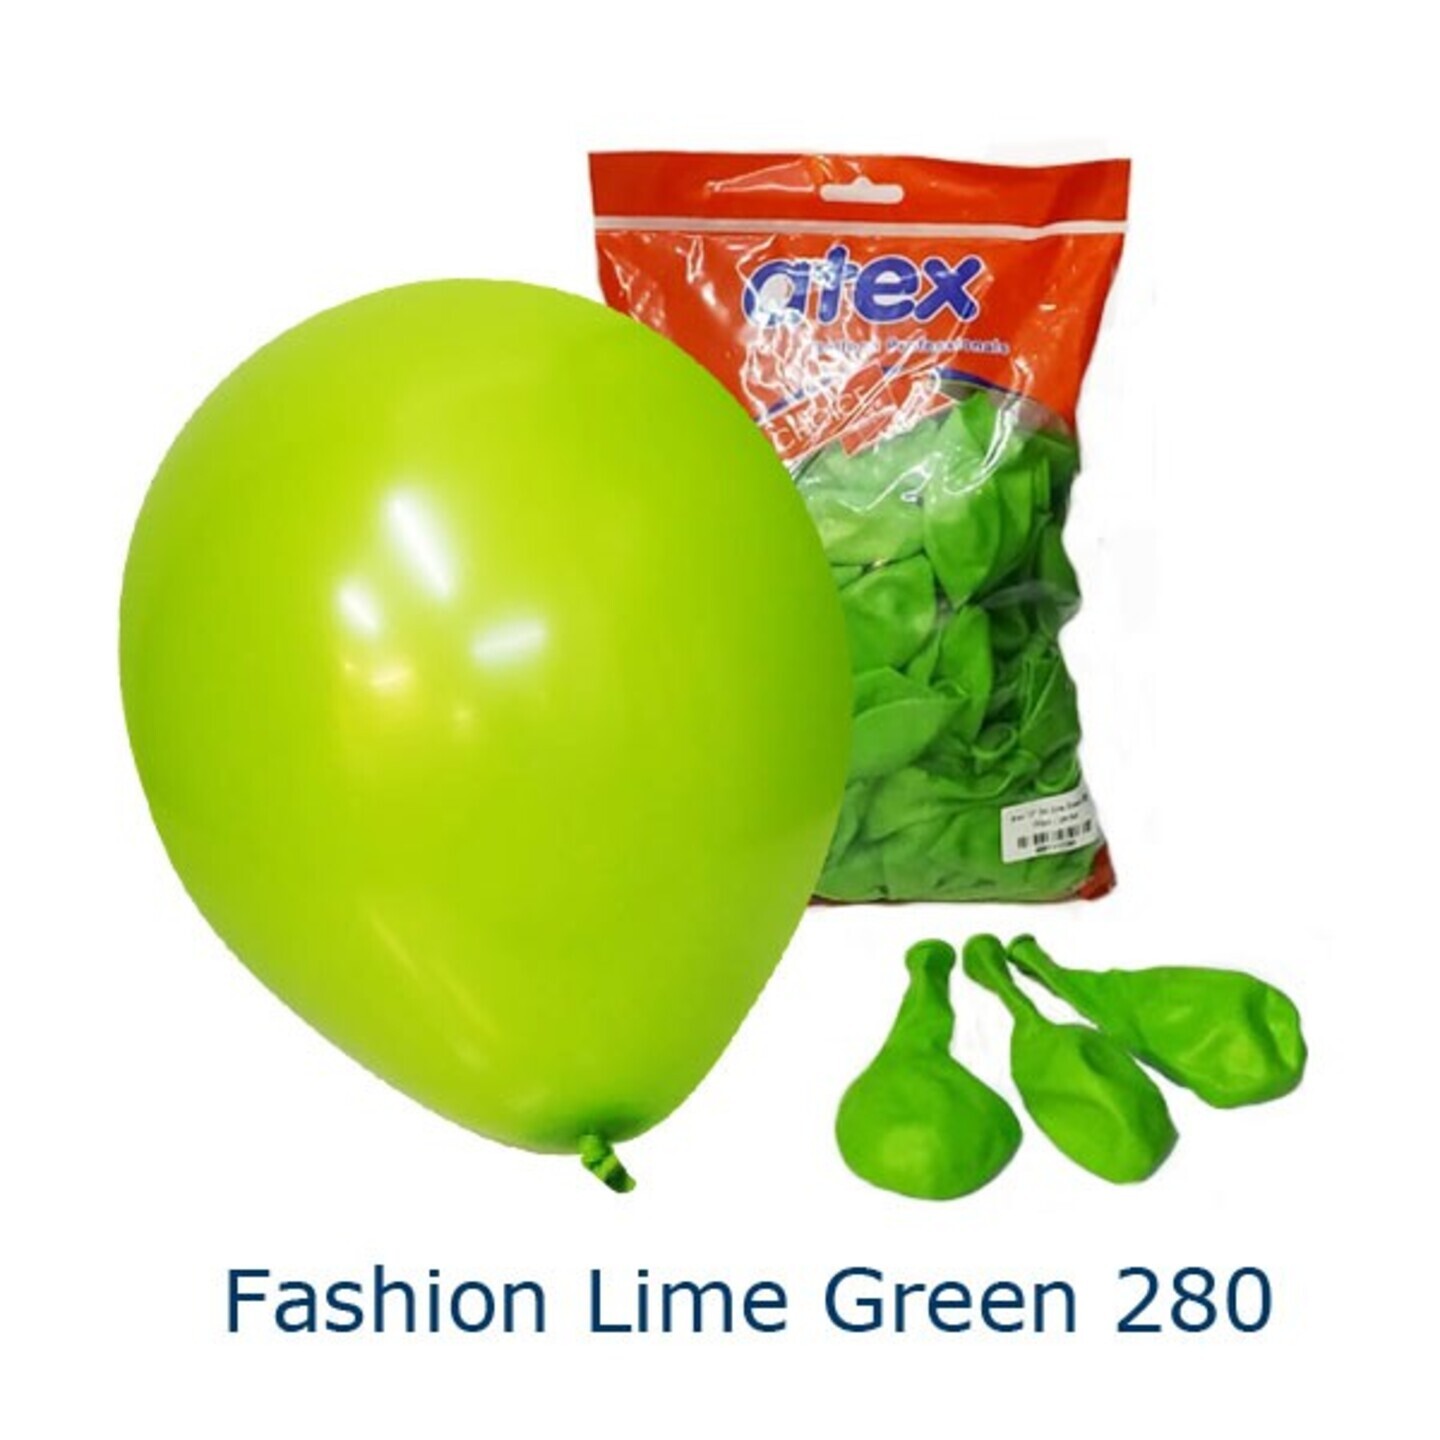 Fashion Lime Green 280